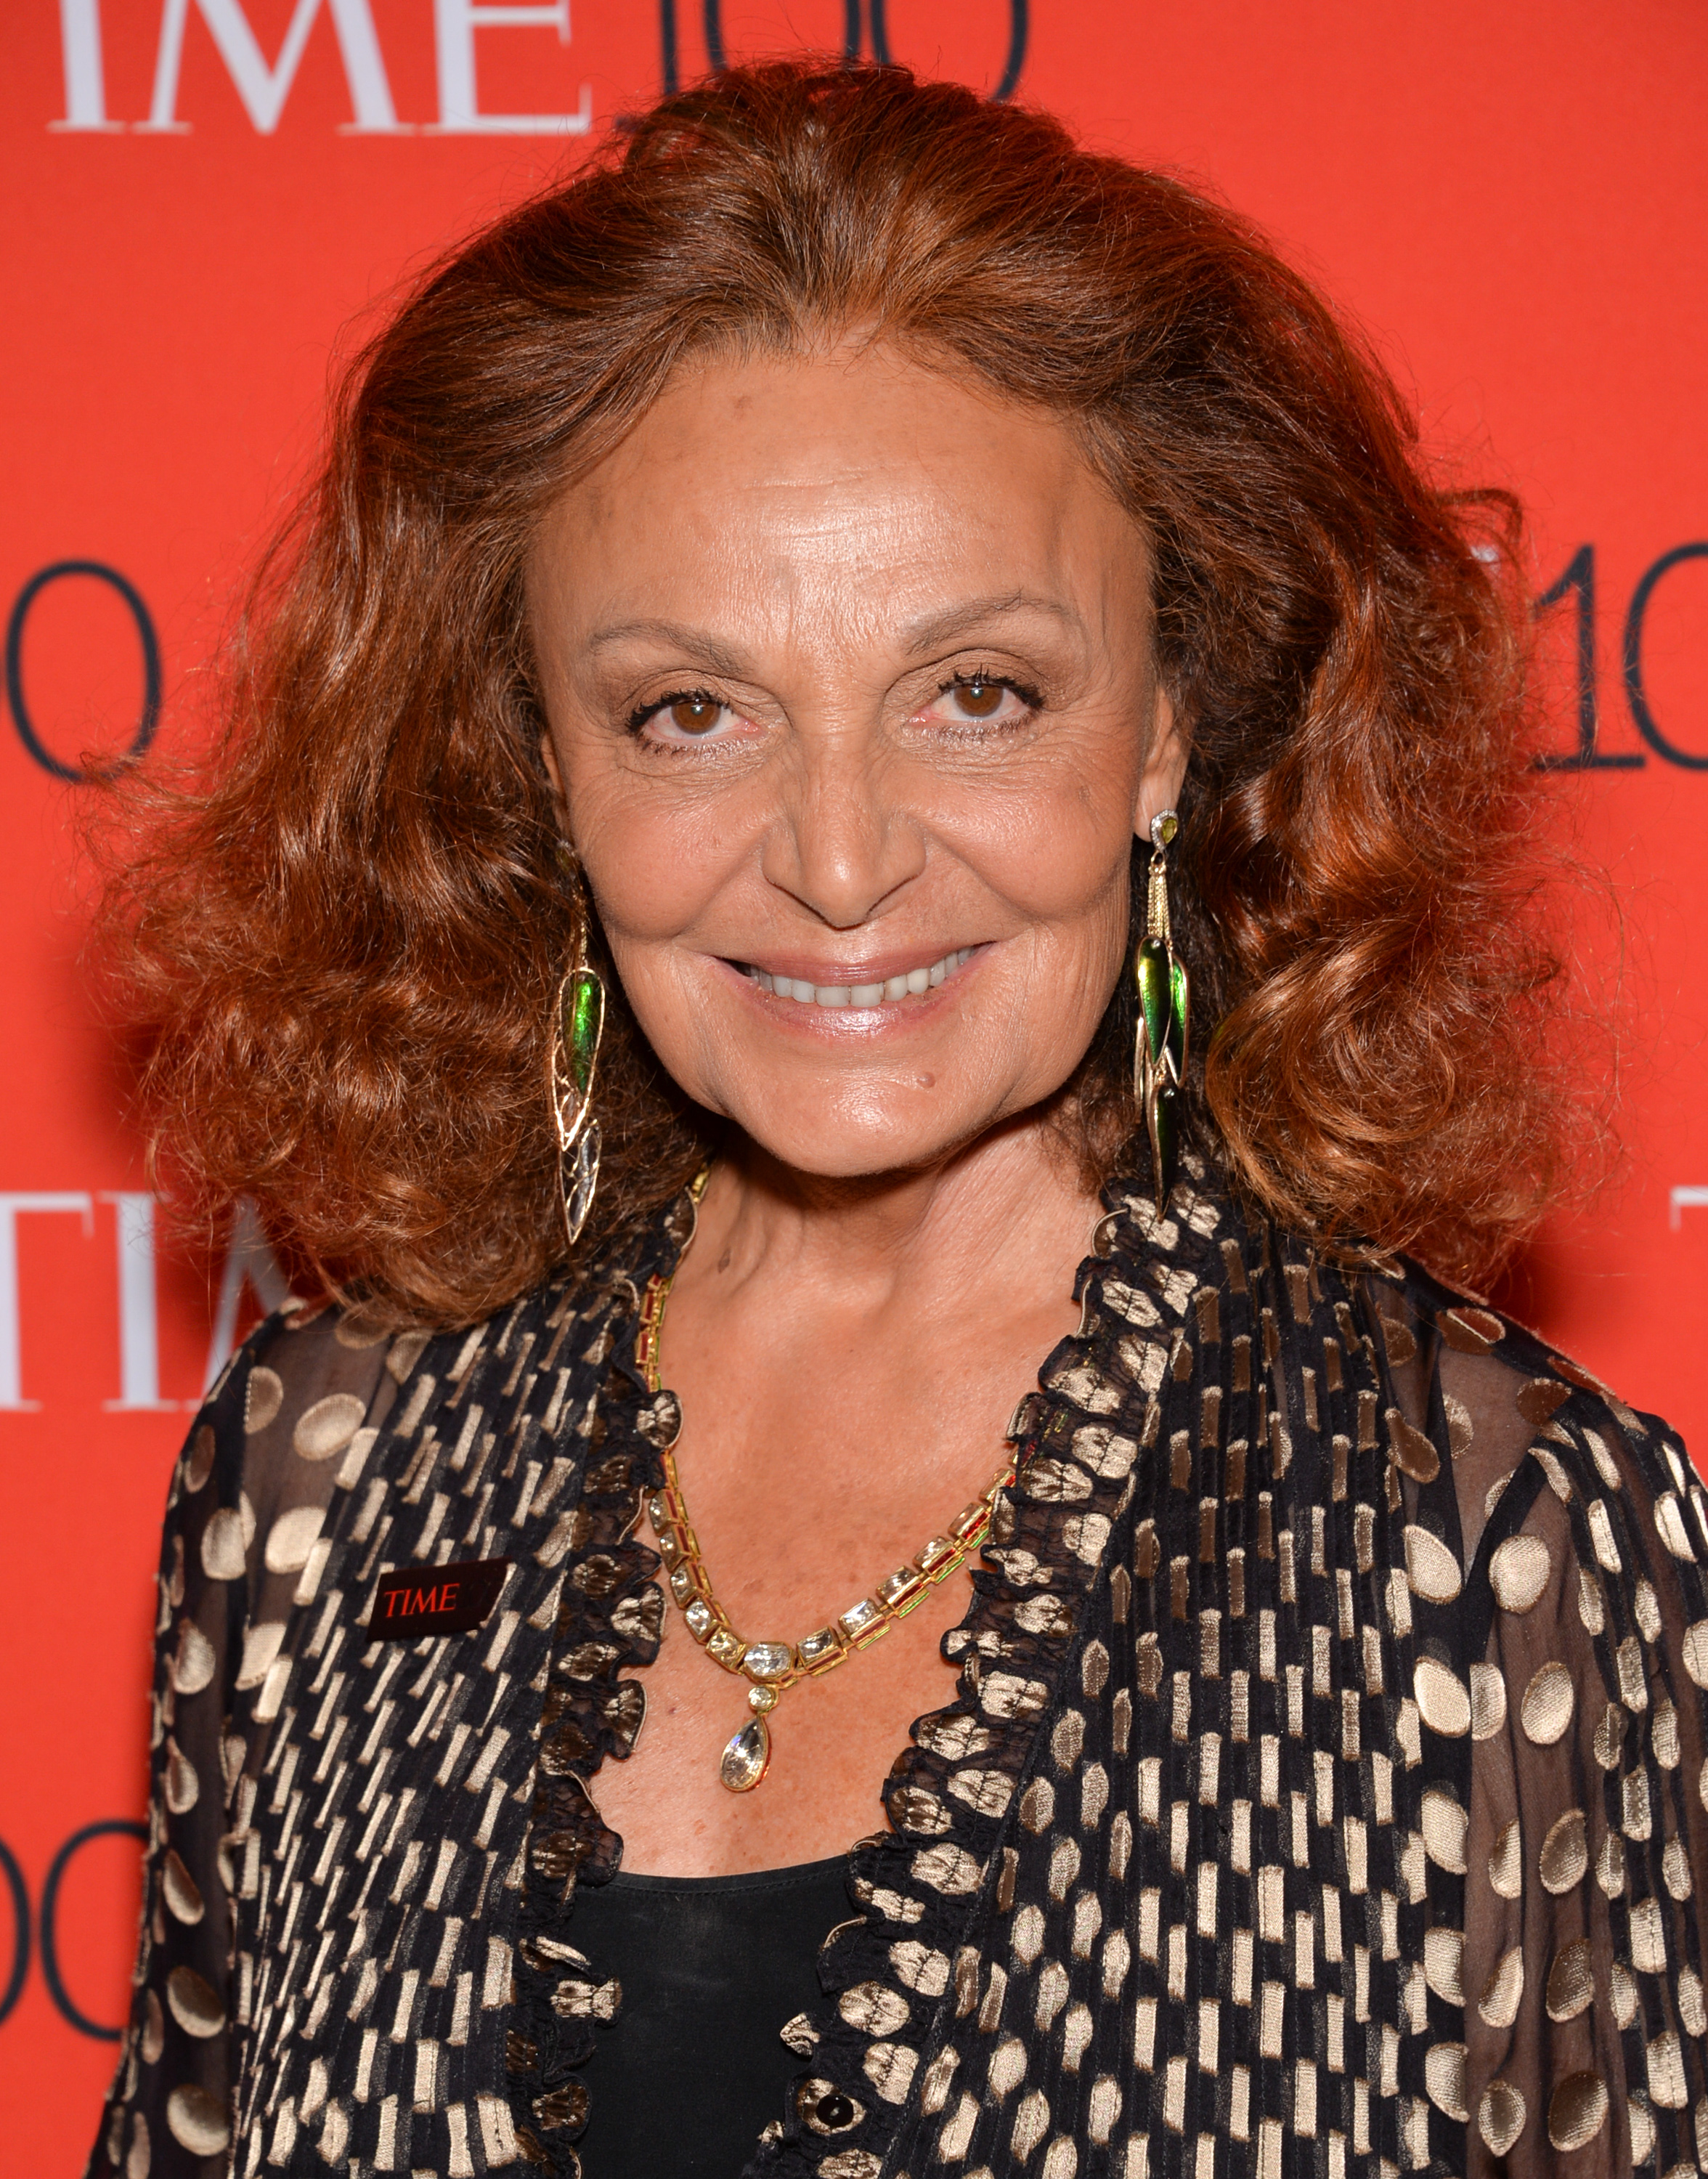 Diane von Furstenberg attends the TIME 100 Gala in New York City on April 21, 2015. (Evan Agostini—AP)